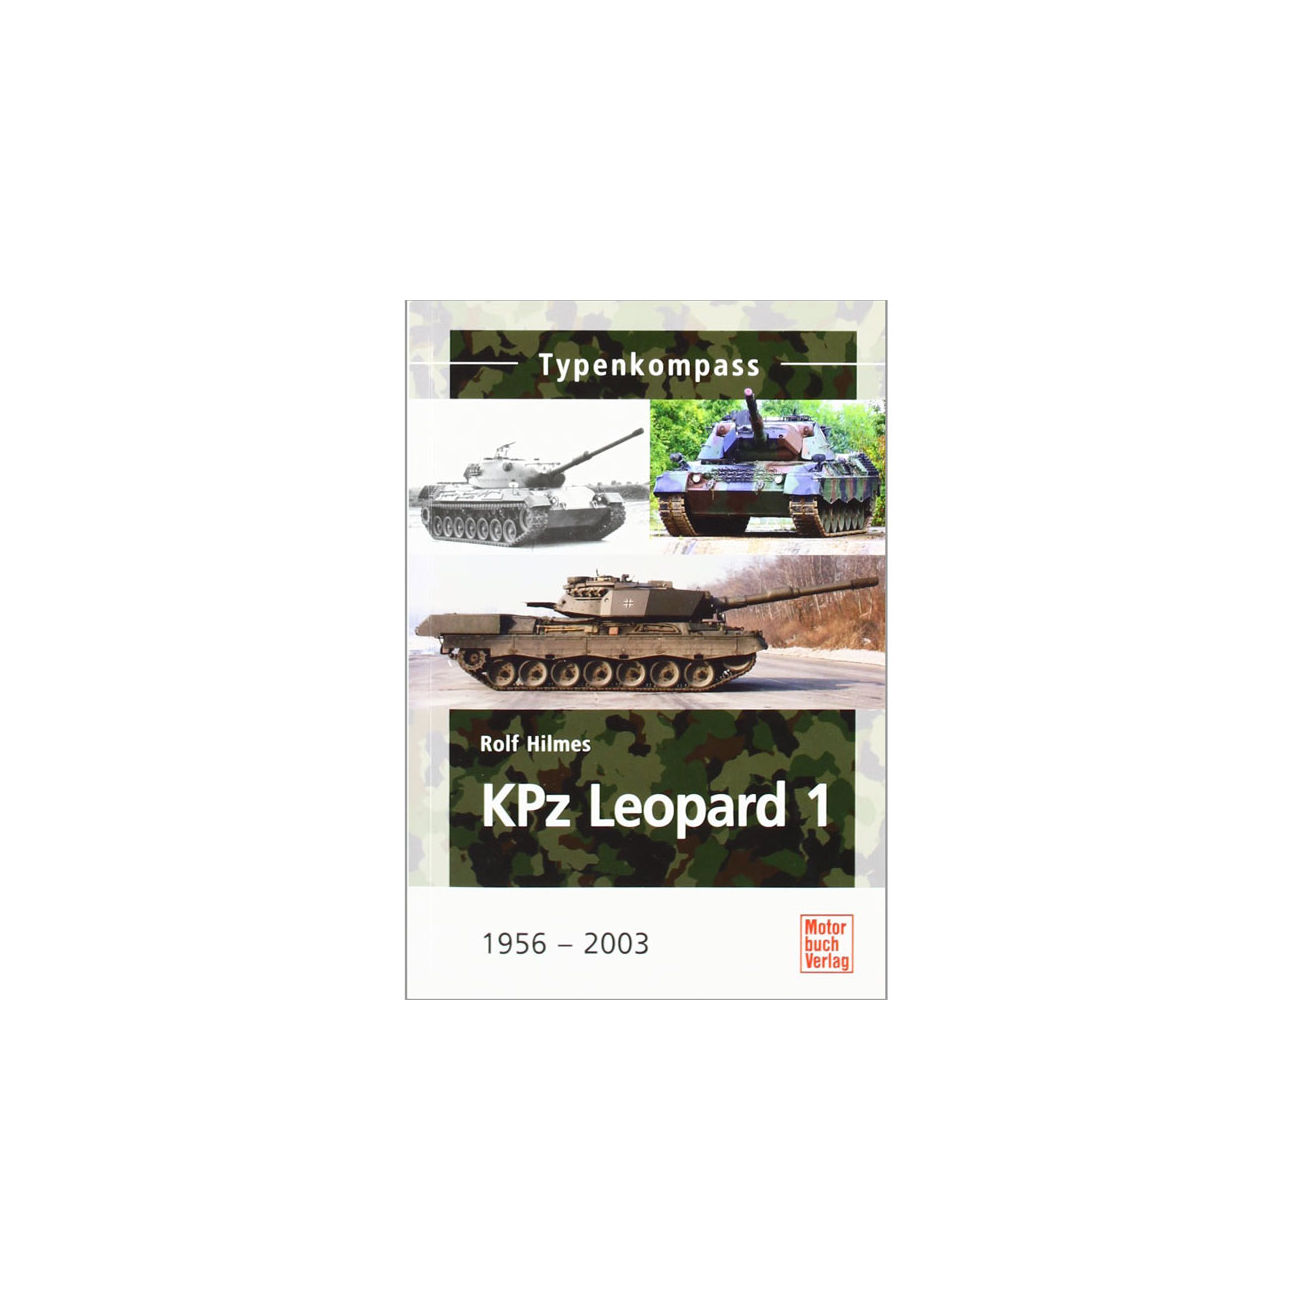 Typenkompass KPz Leopard 1 1956 - 2003